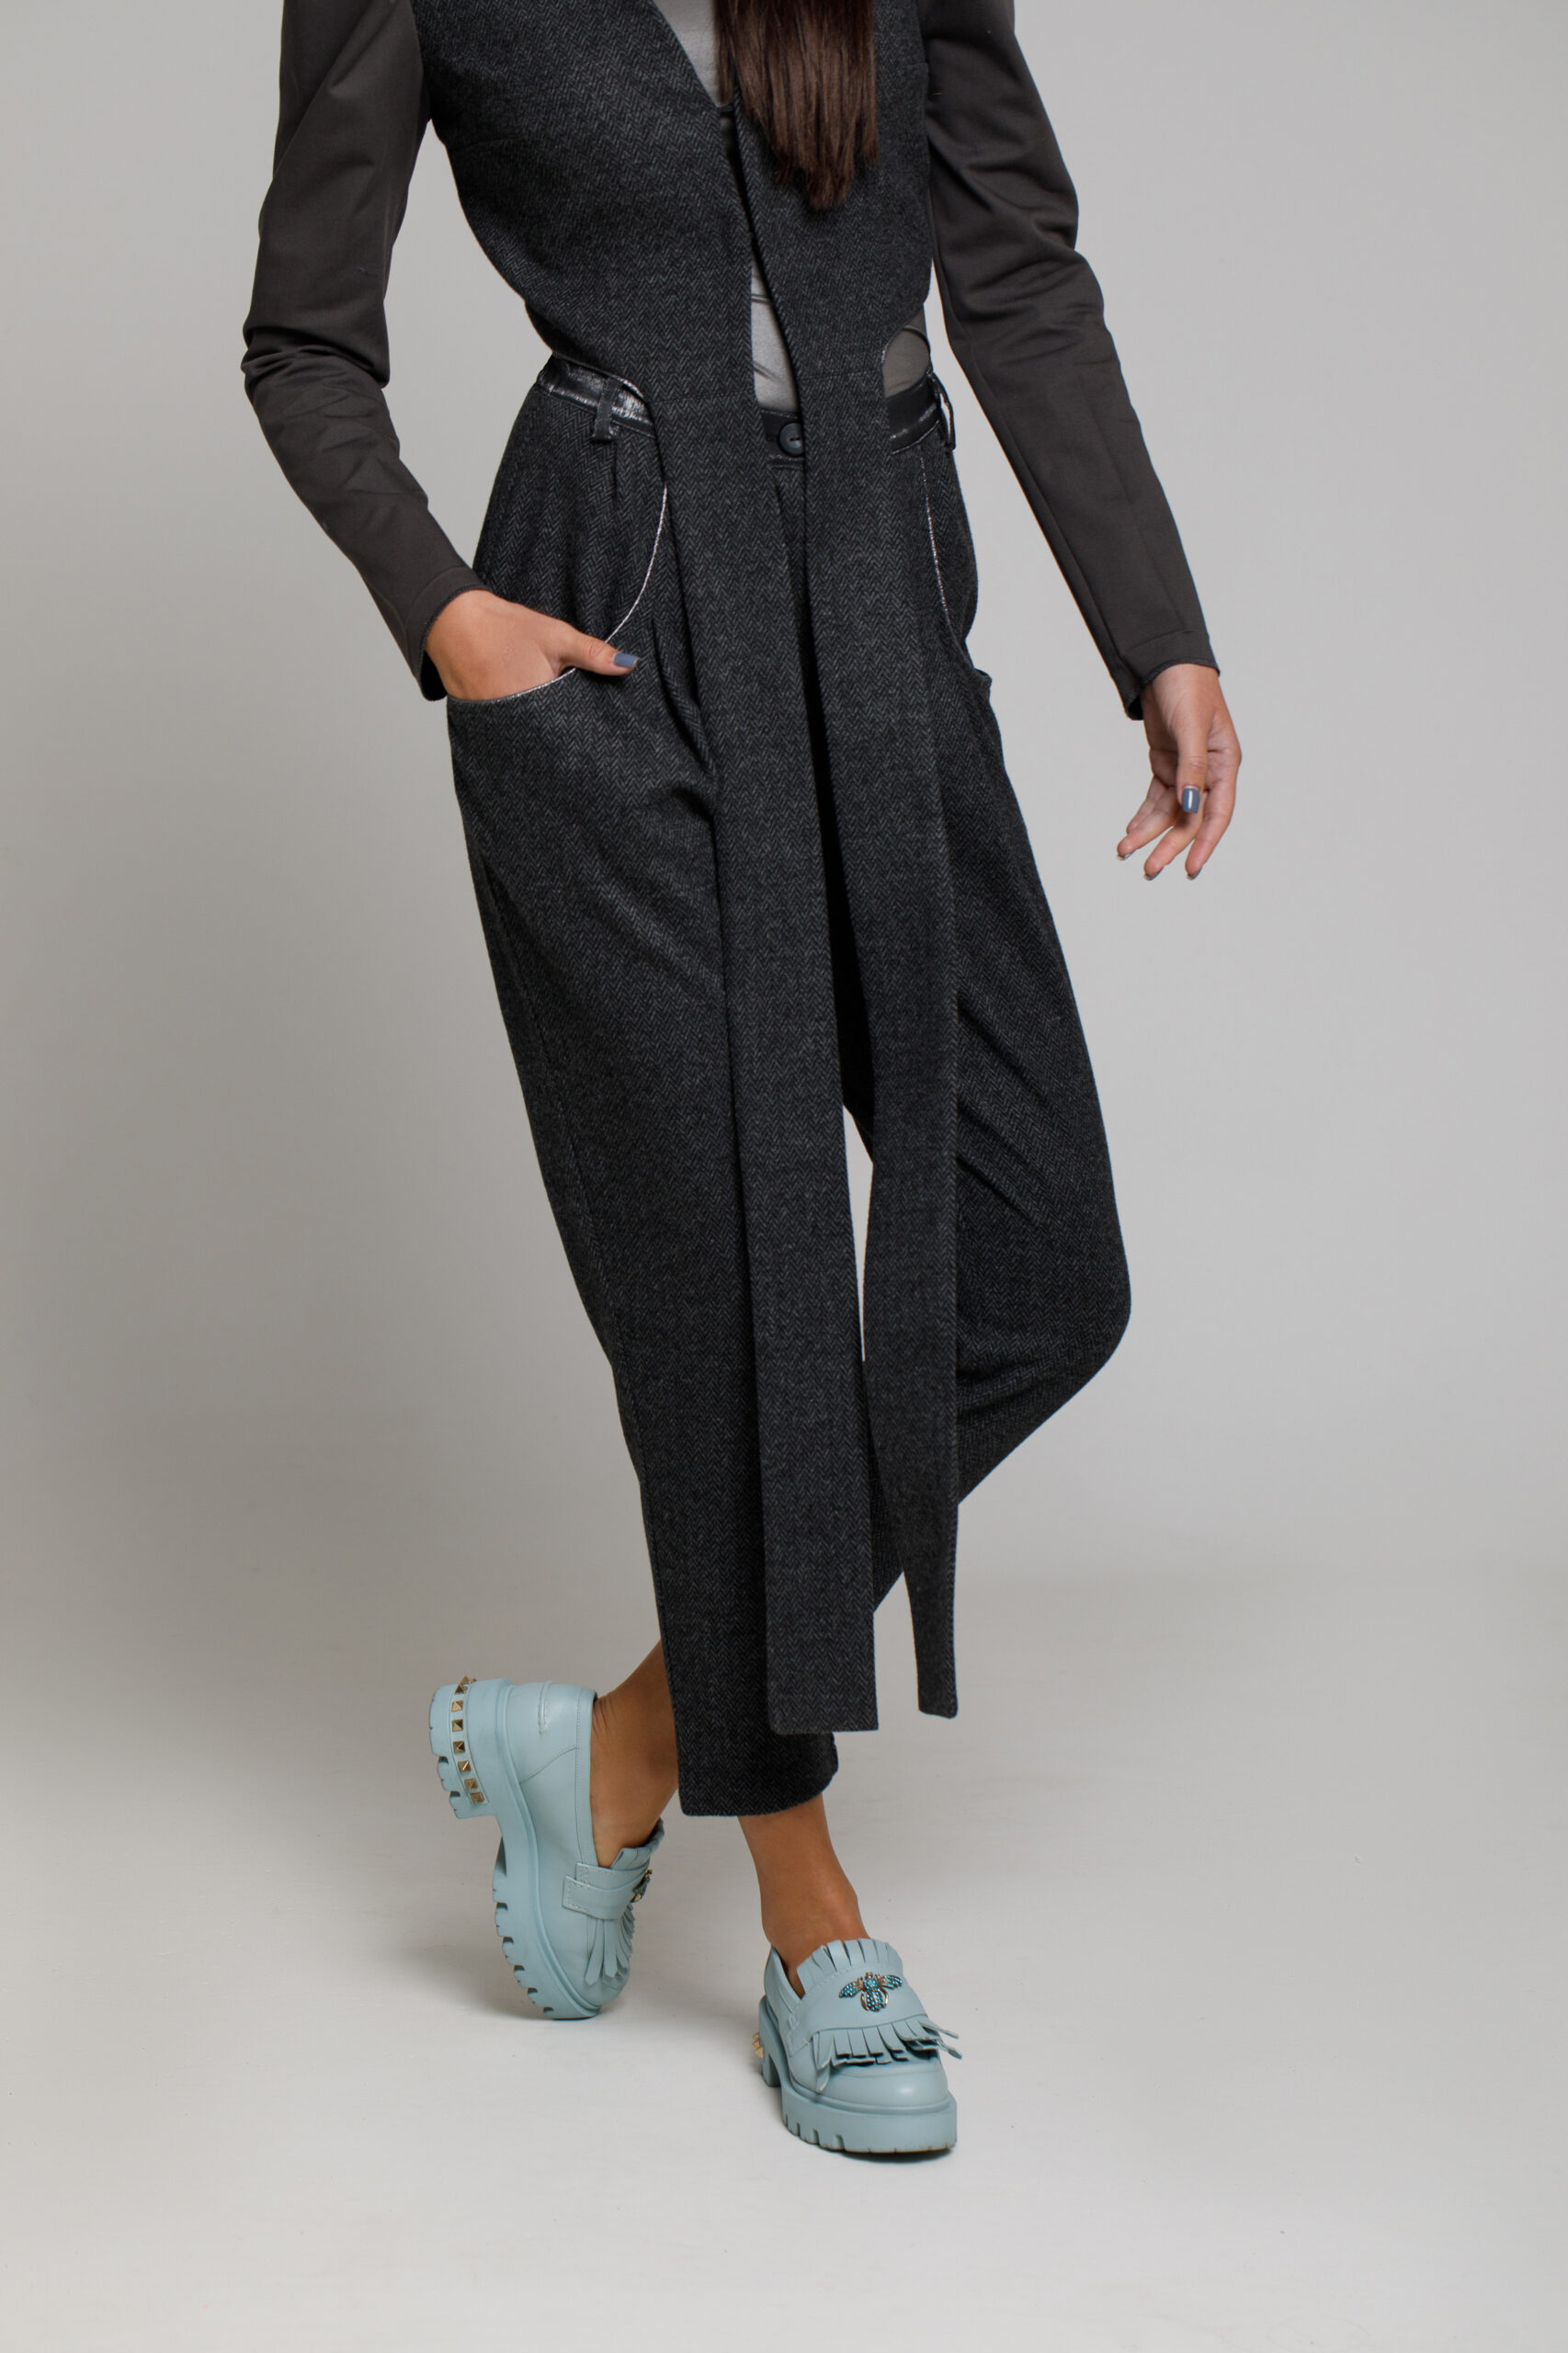 FLAVIO"23 trousers in gray fabric. Natural fabrics, original design, handmade embroidery